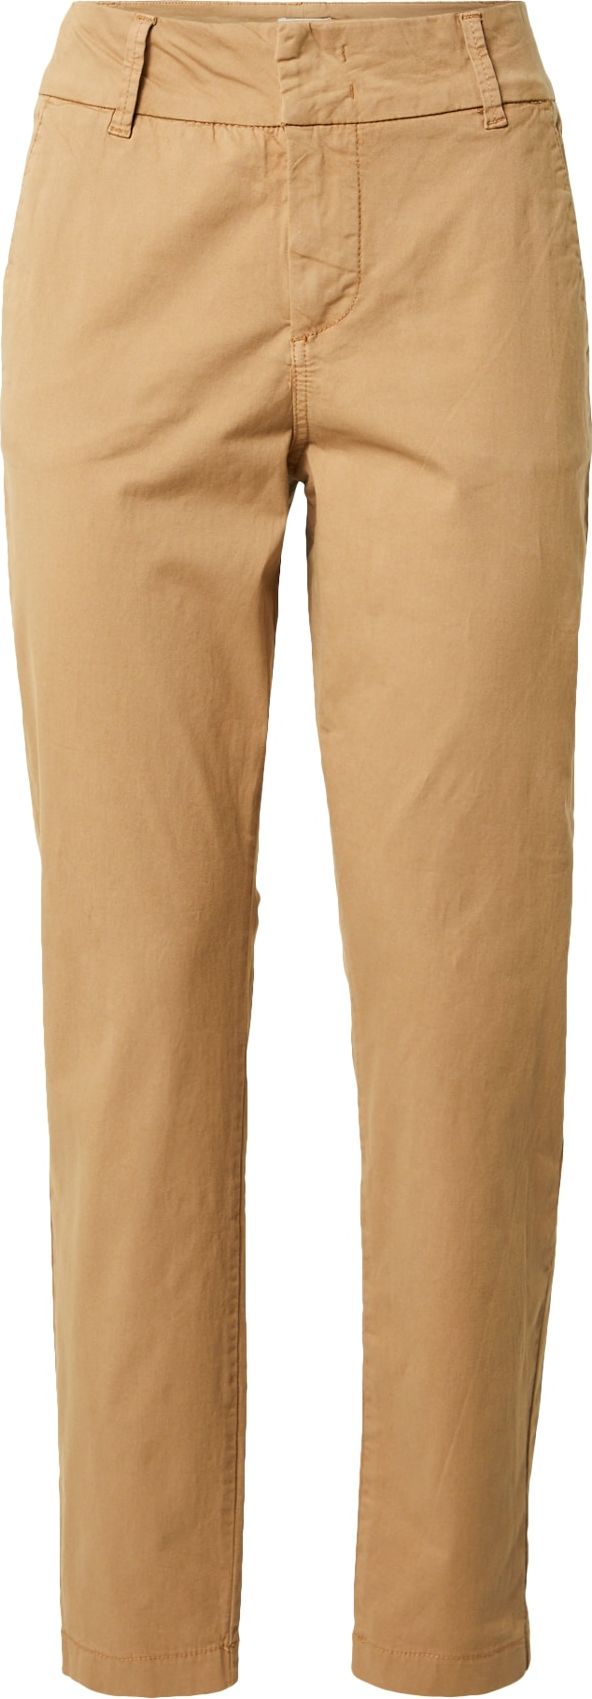 Part Two Chino kalhoty 'Soffys' velbloudí